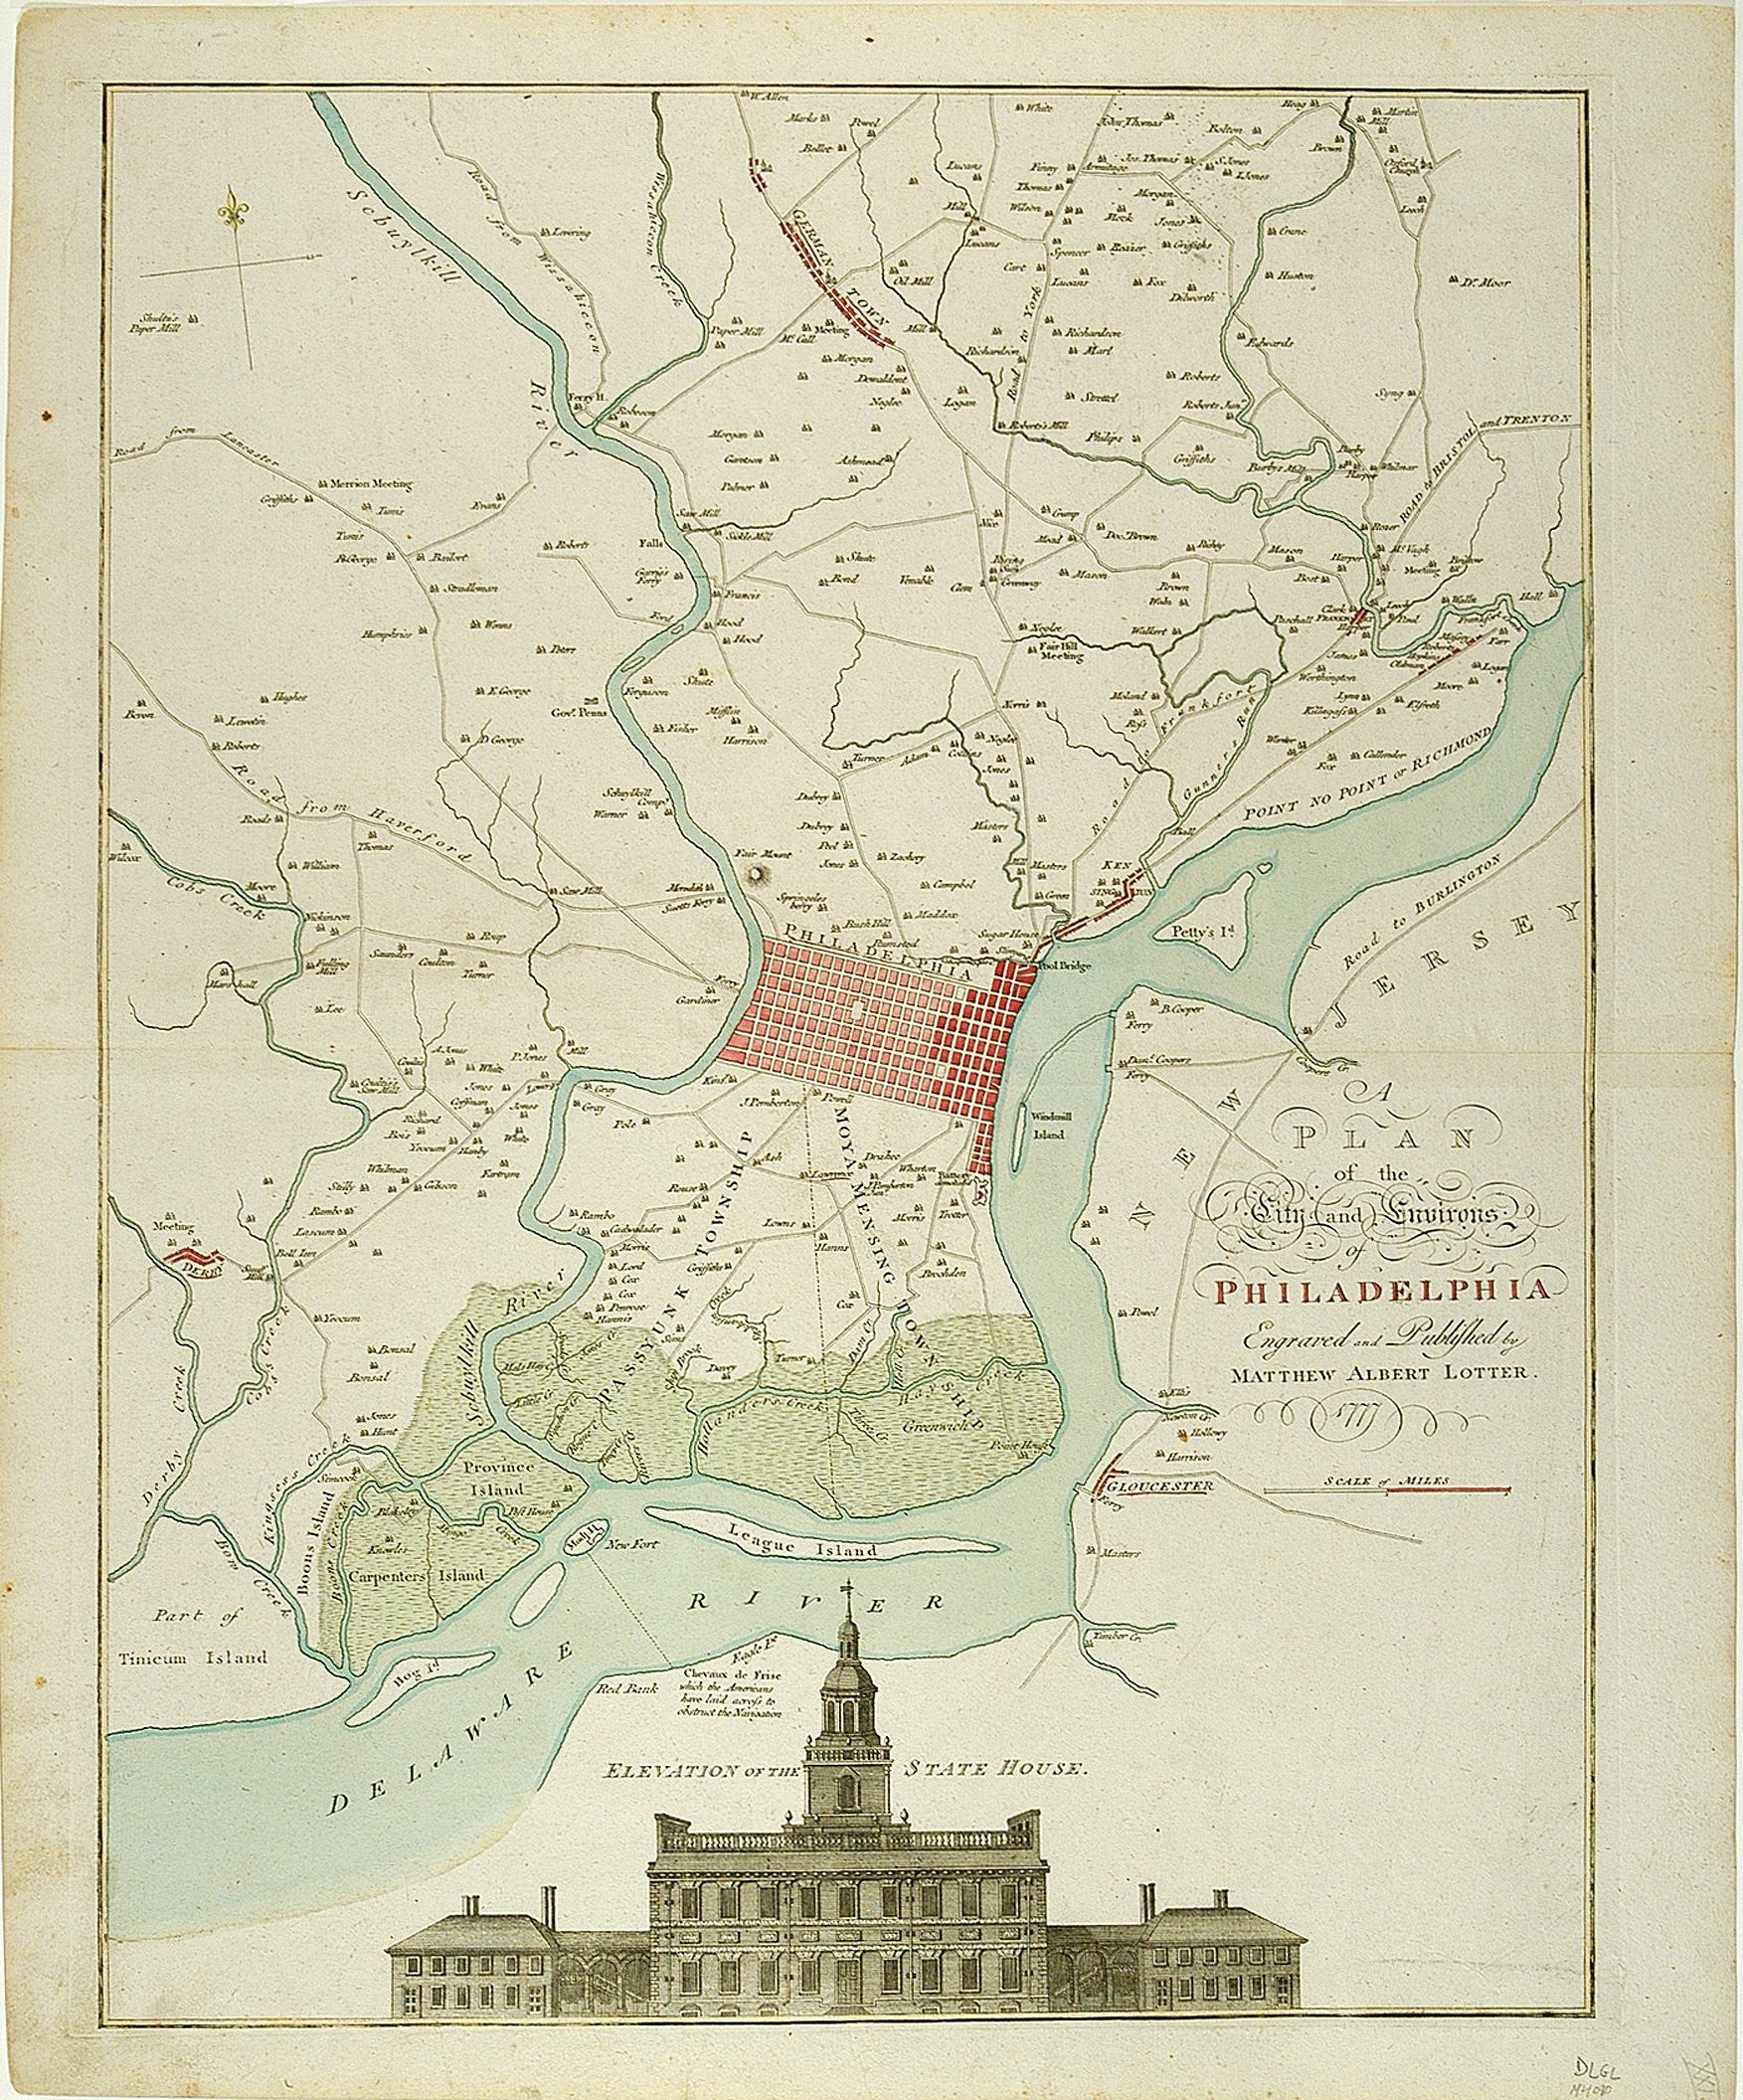 A Plan of the City and Environs of Philadelphia, Matthäus Albrect Lotter, [Augsburg]: Matthäus Albrect Lotter, 1777